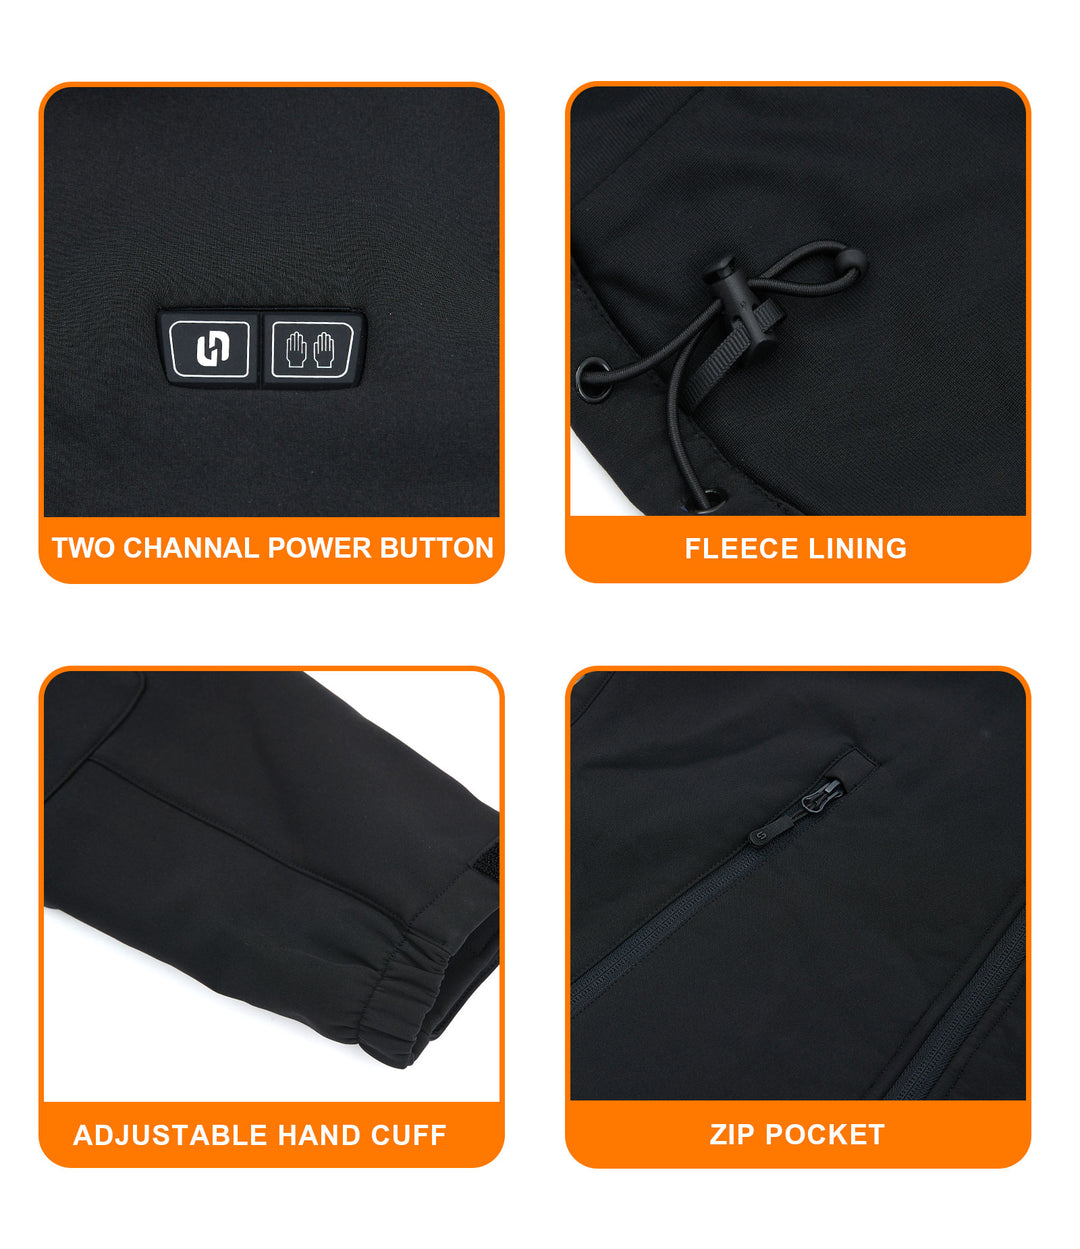 Women's Heated Jacket - Black (Dual-Control)